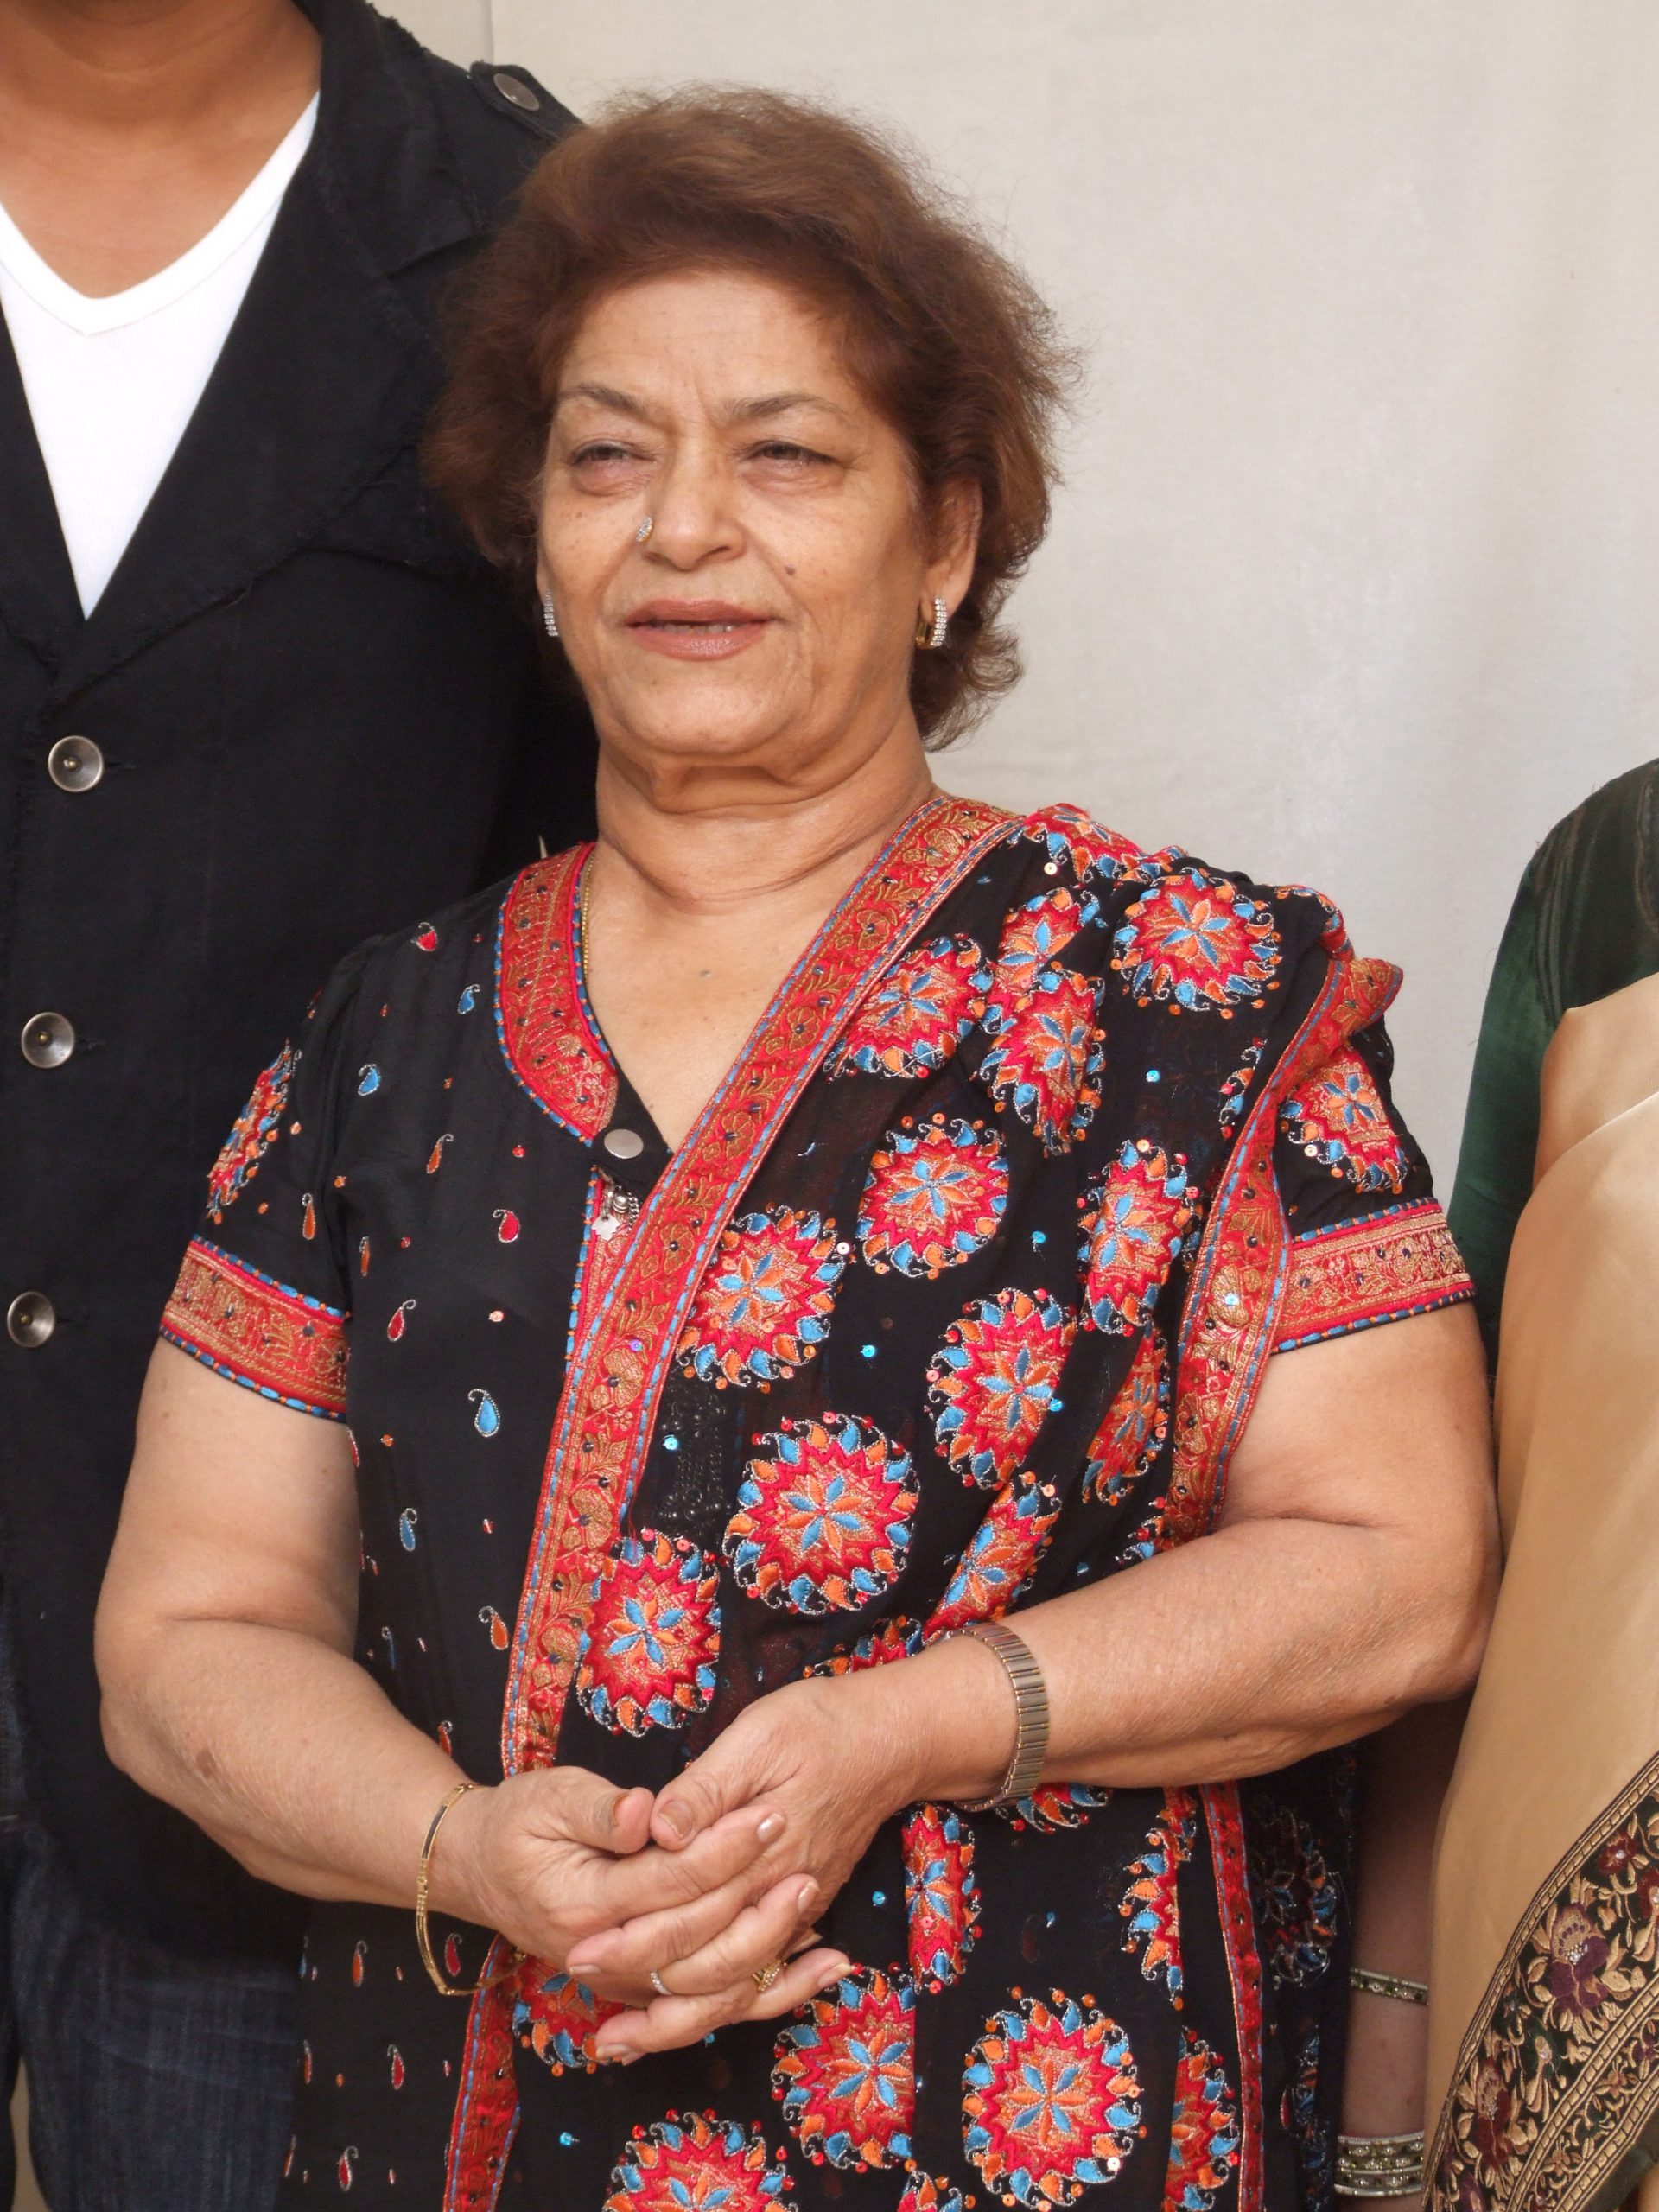 Saroj Khan spoke fondly of Vdaodara during her visit in 2009